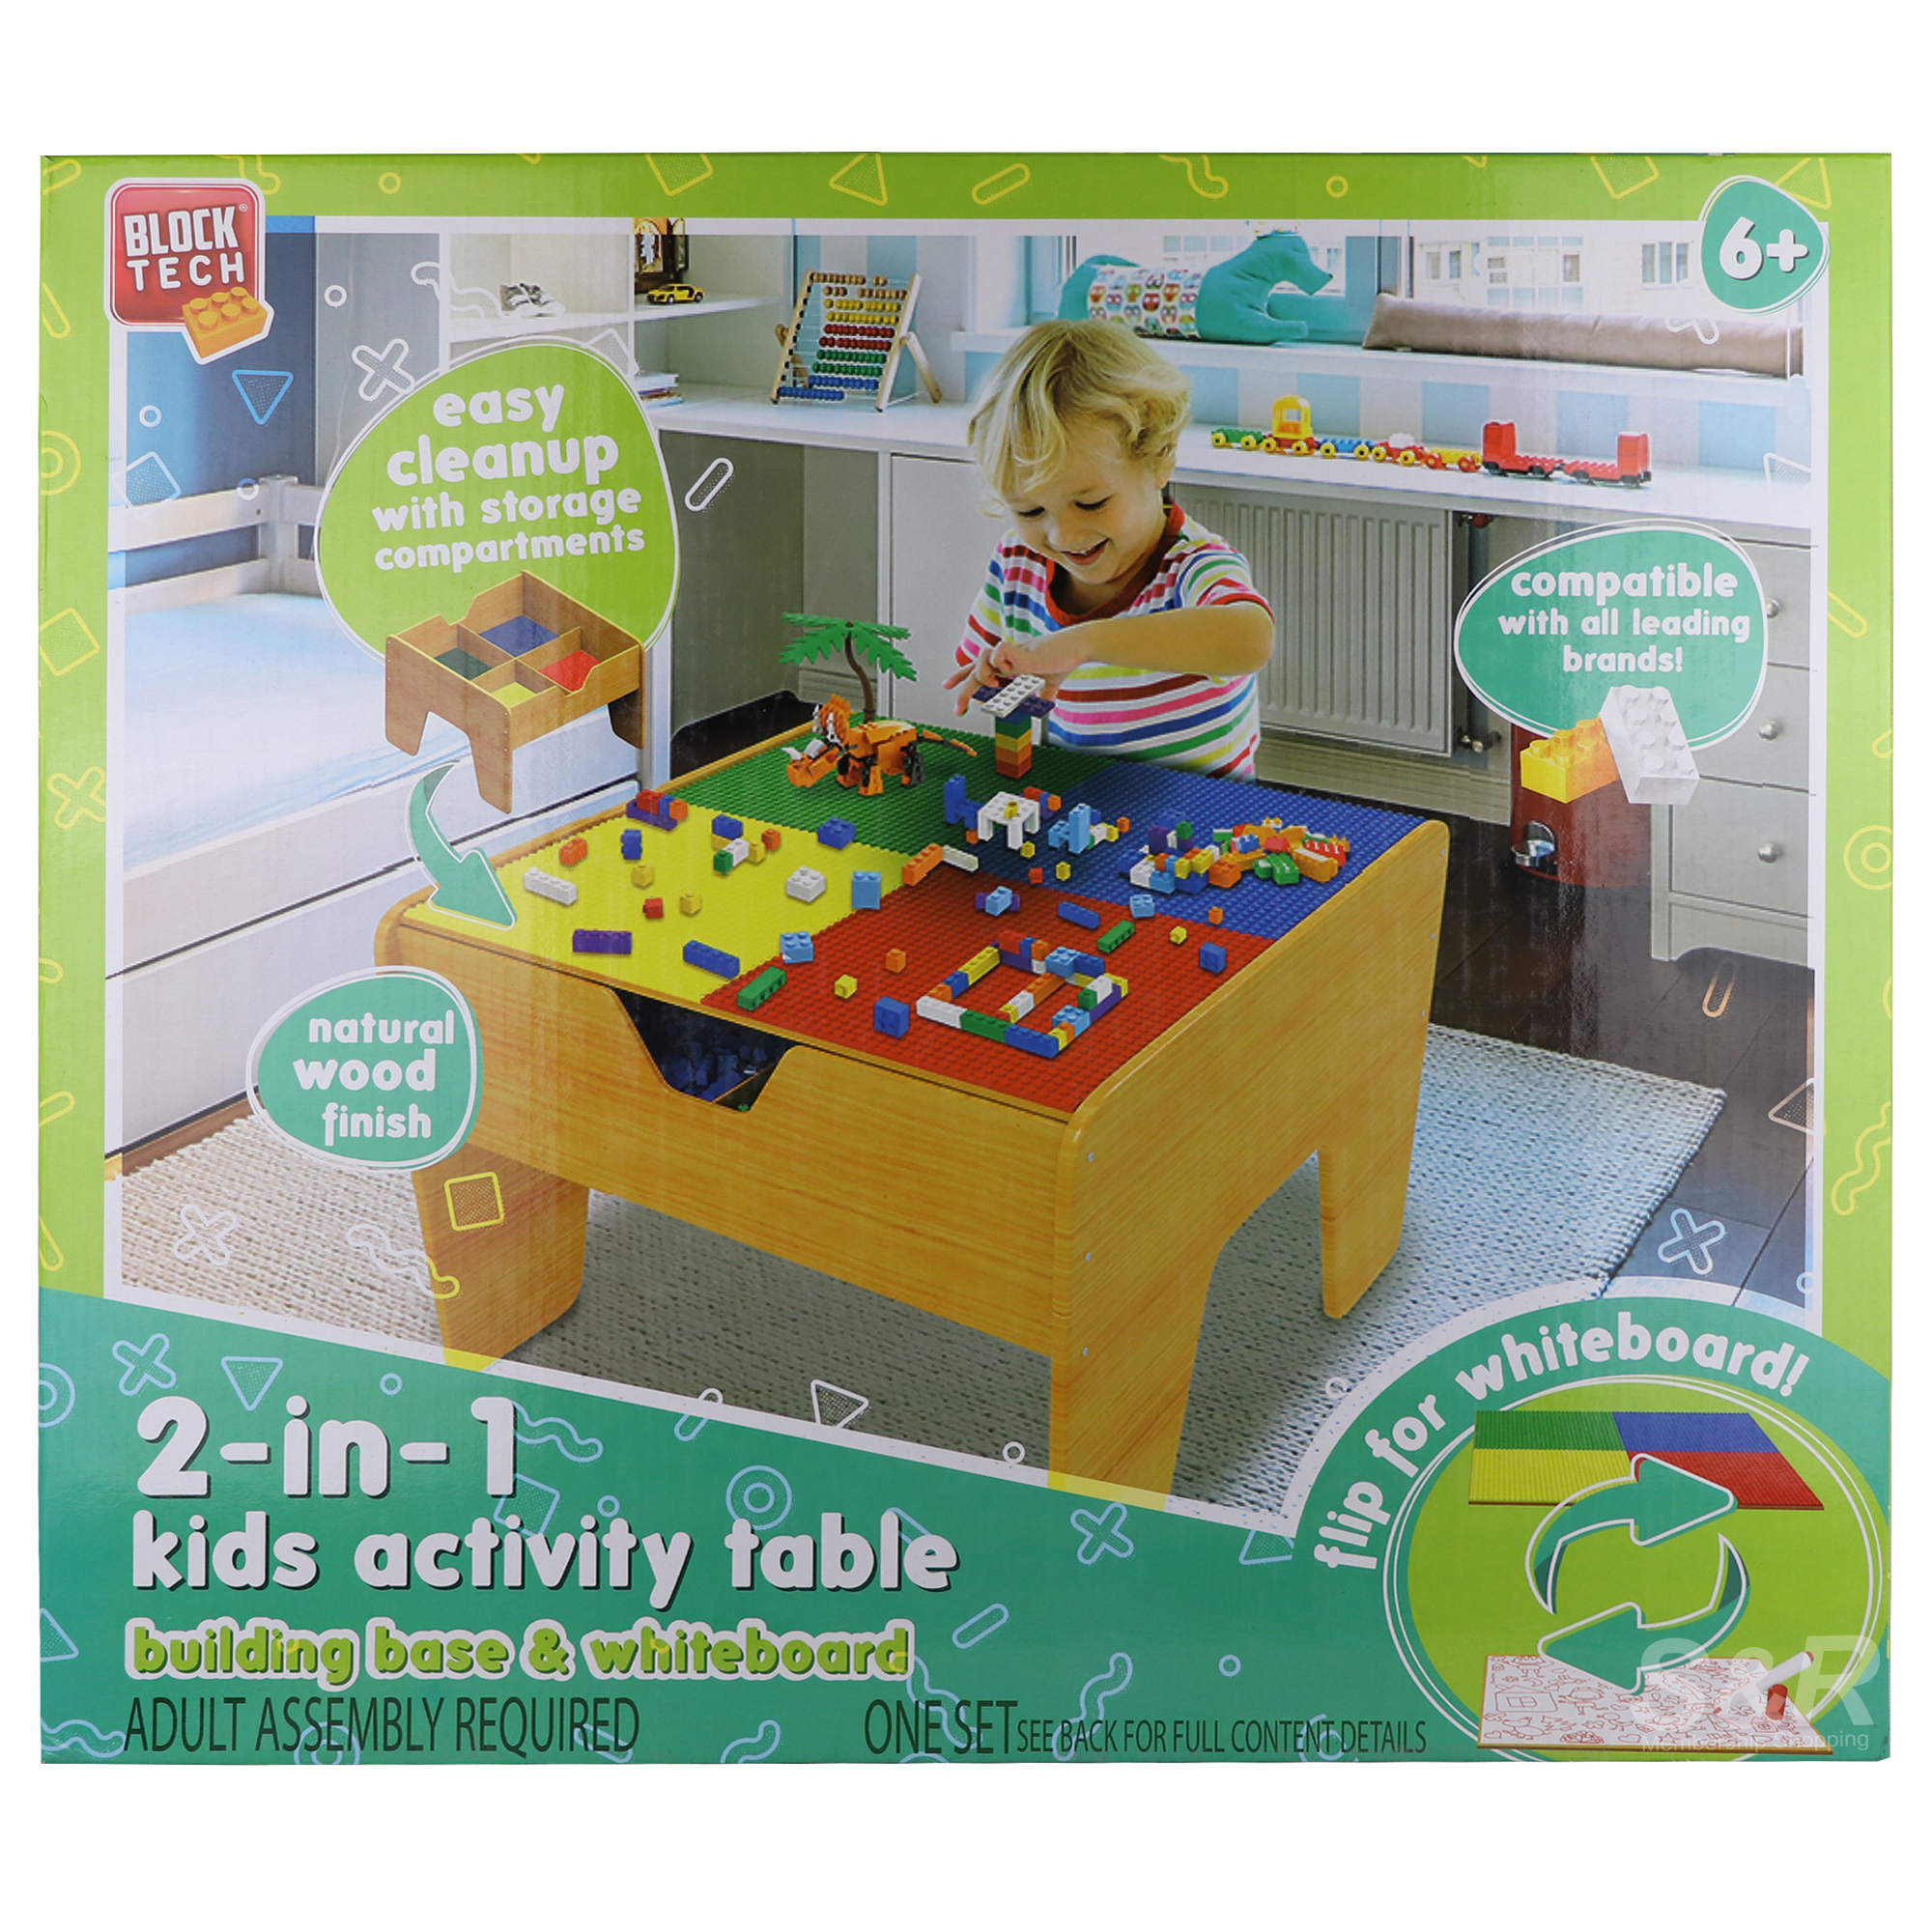 Block Tech 2-in-1 Kids Activity Table